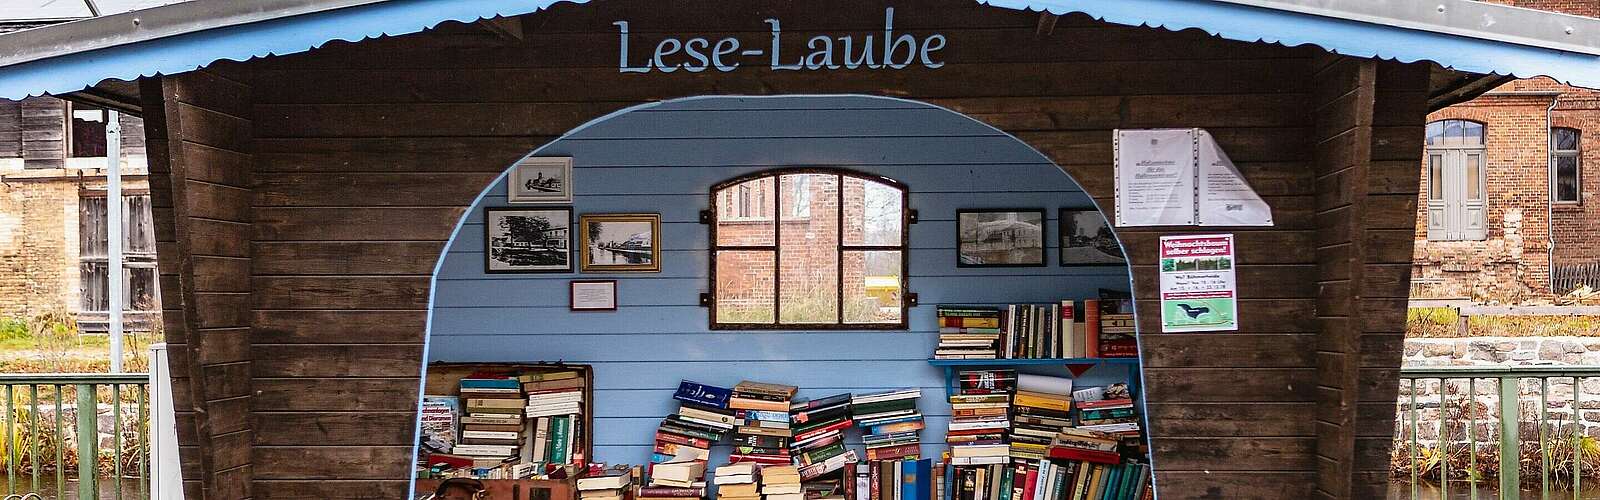 Lese-Laube in Zerpenschleuse,
        
    

        Foto: Fotograf / Lizenz - Media Import/Steffen Lehmann